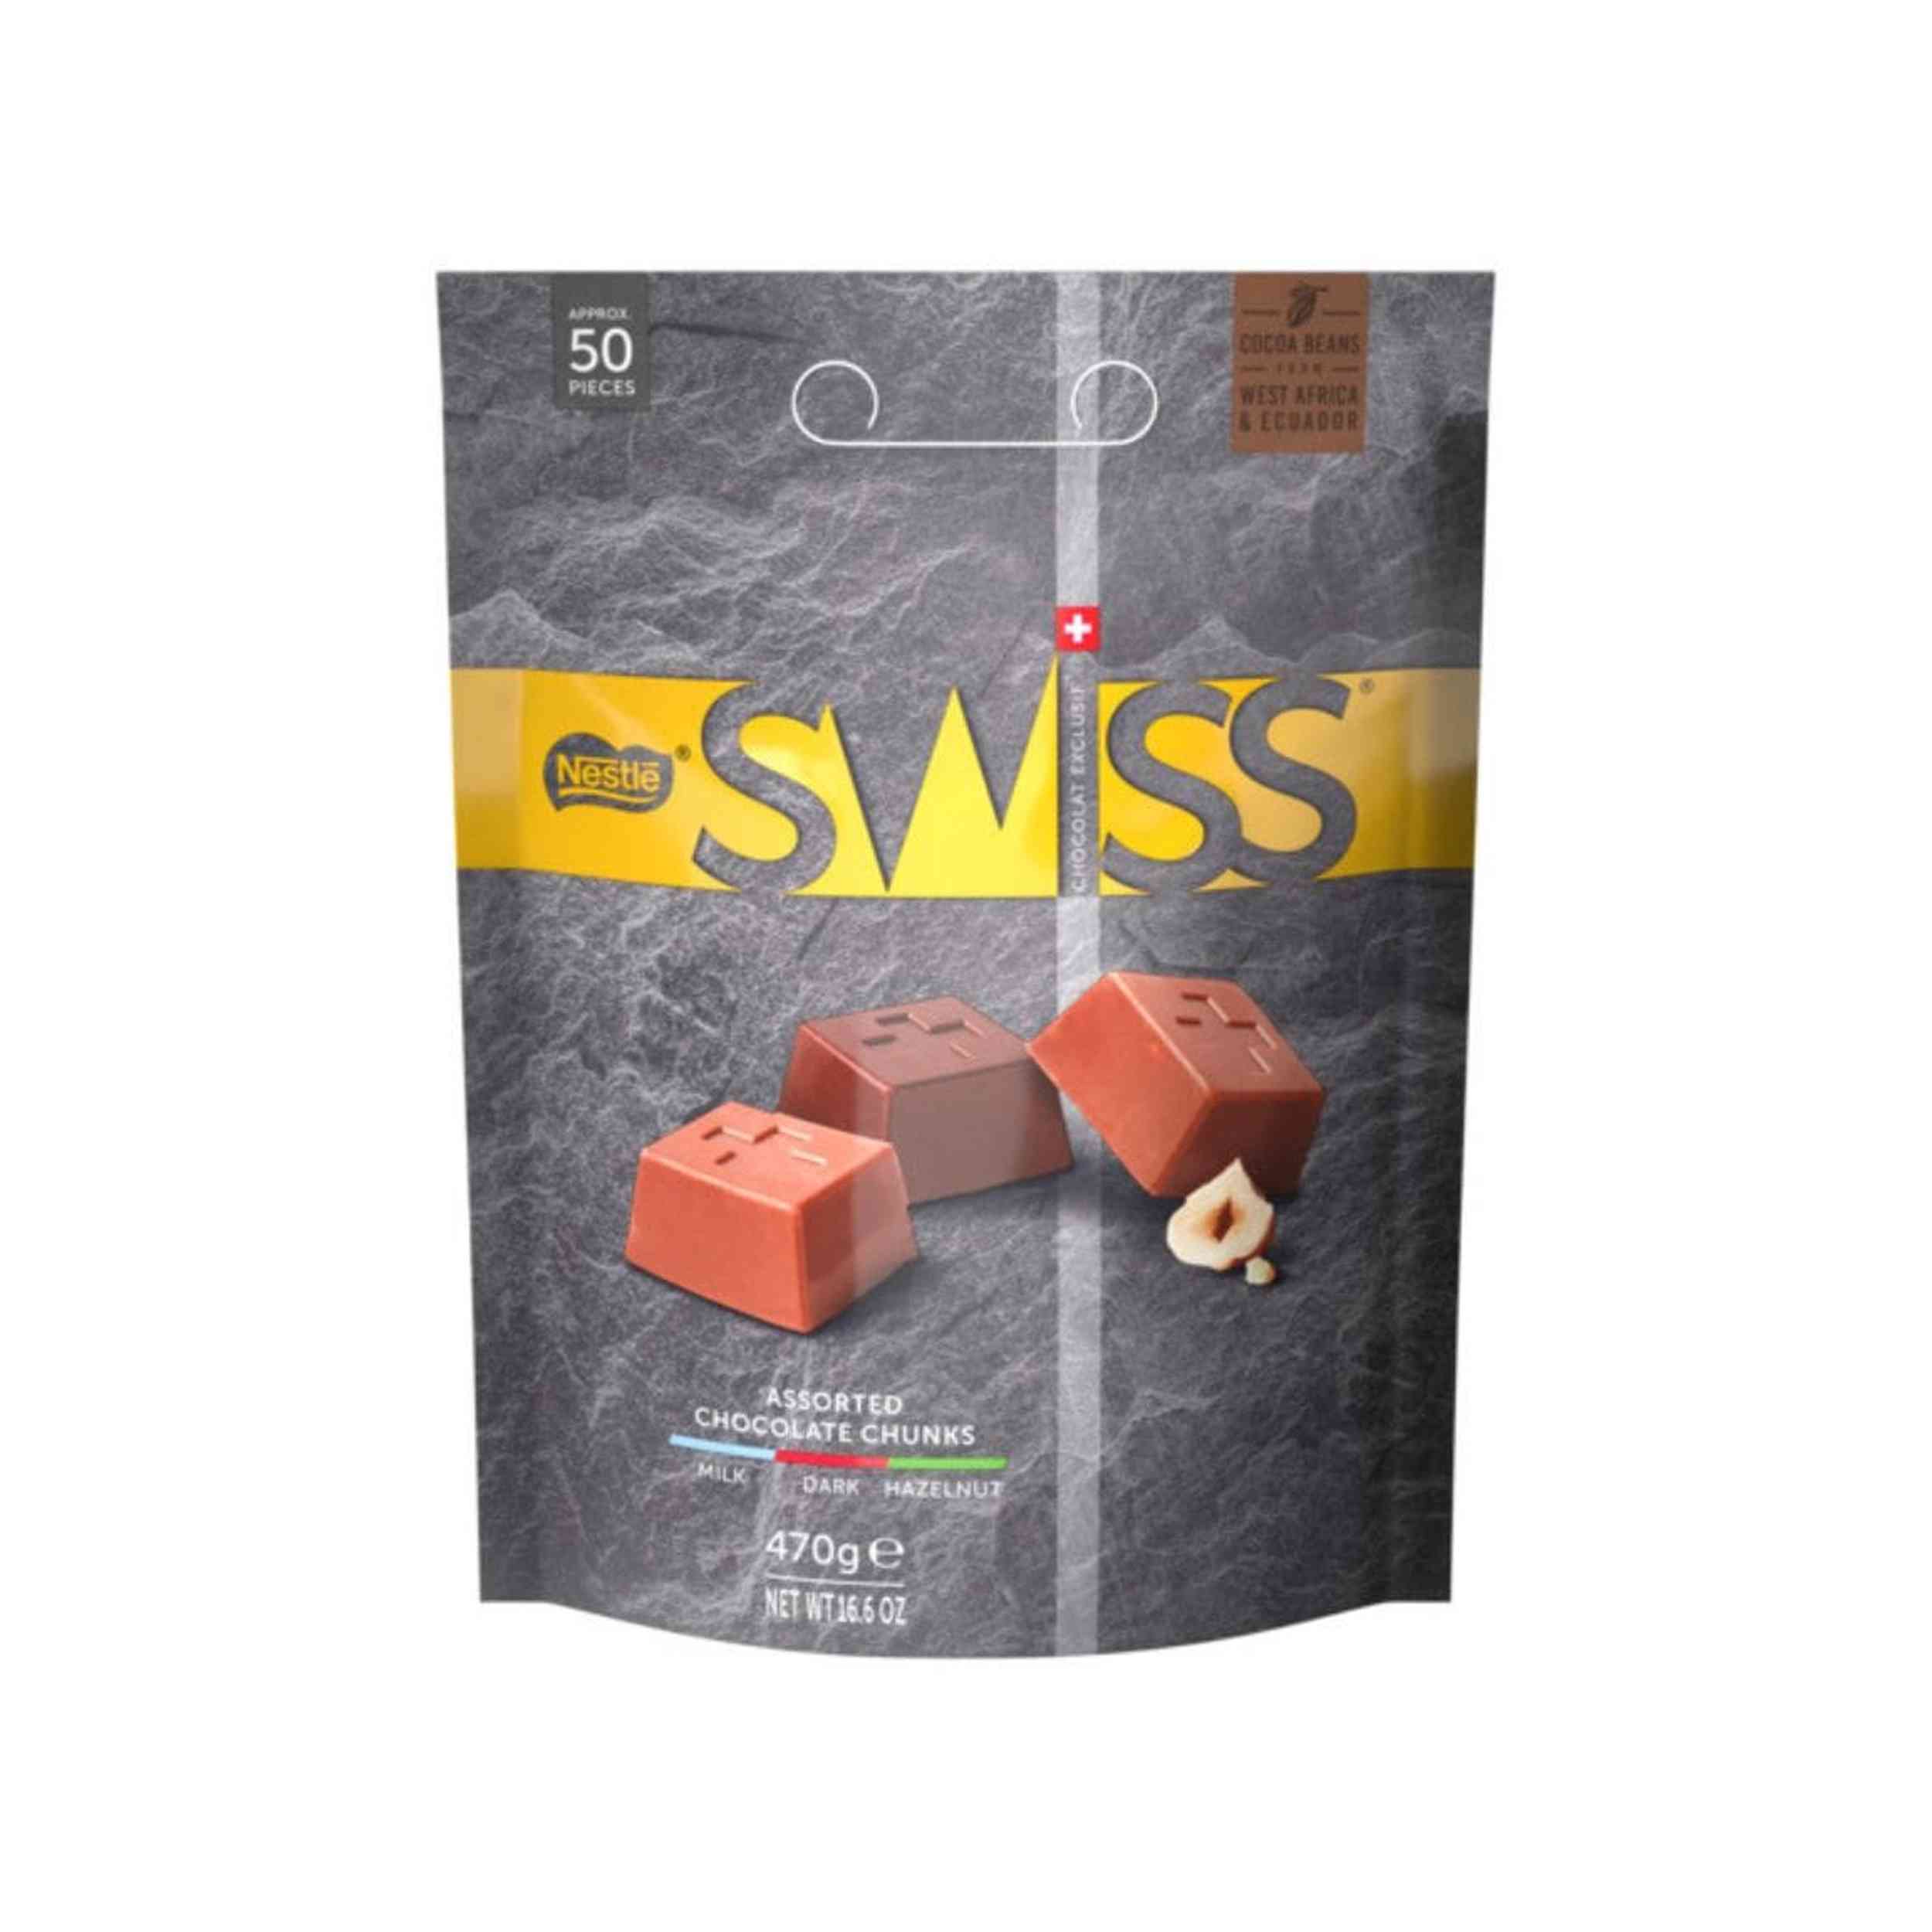 Nestle Swiss Bag